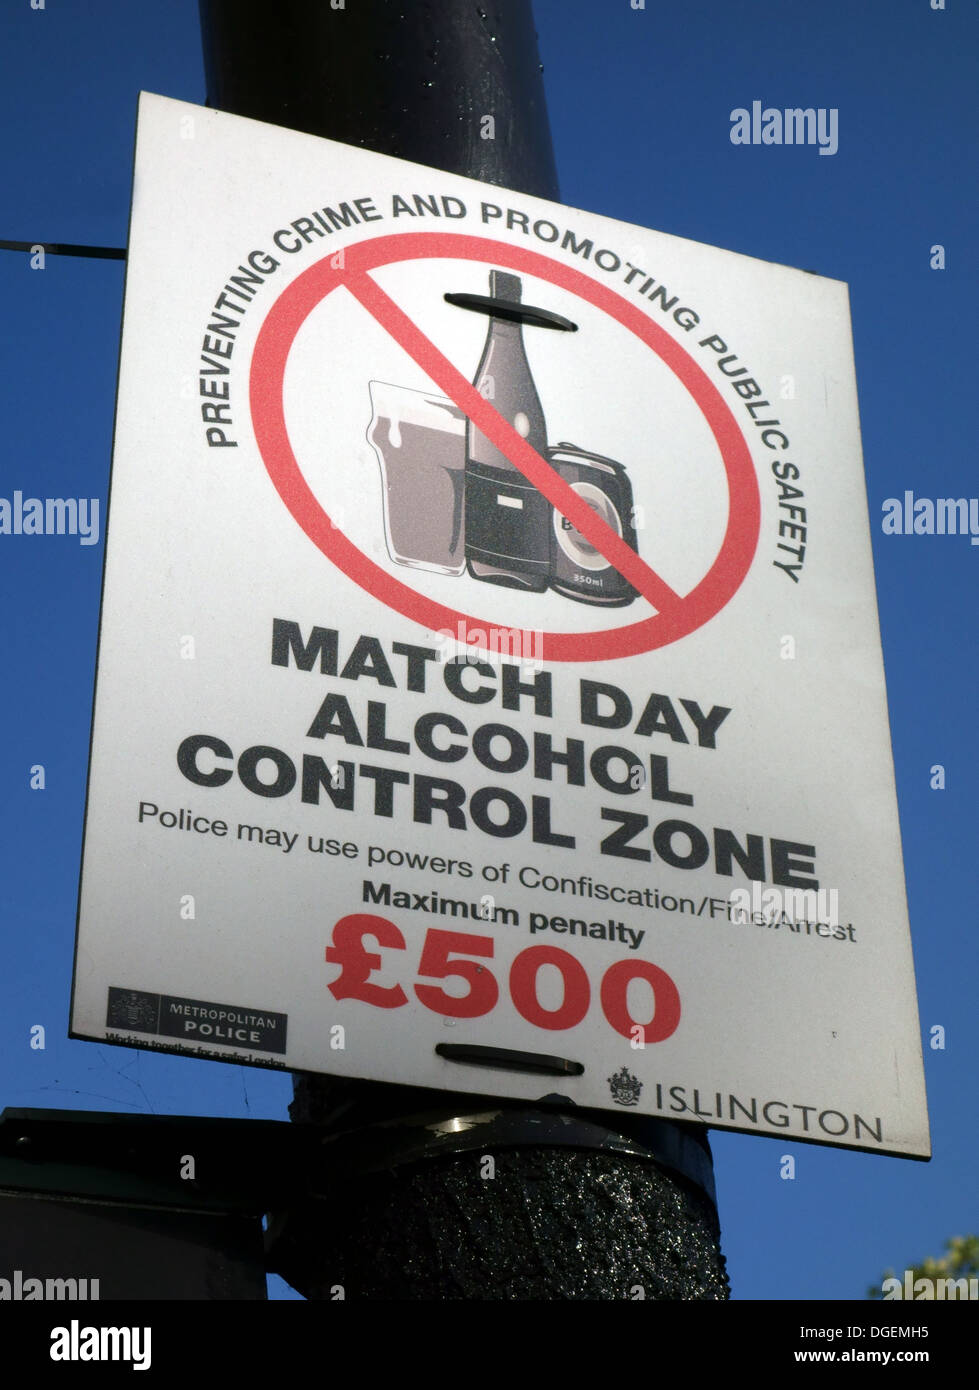 Alcohol match day control zone sign near Arsenal FC Emirates Stadium, London Stock Photo